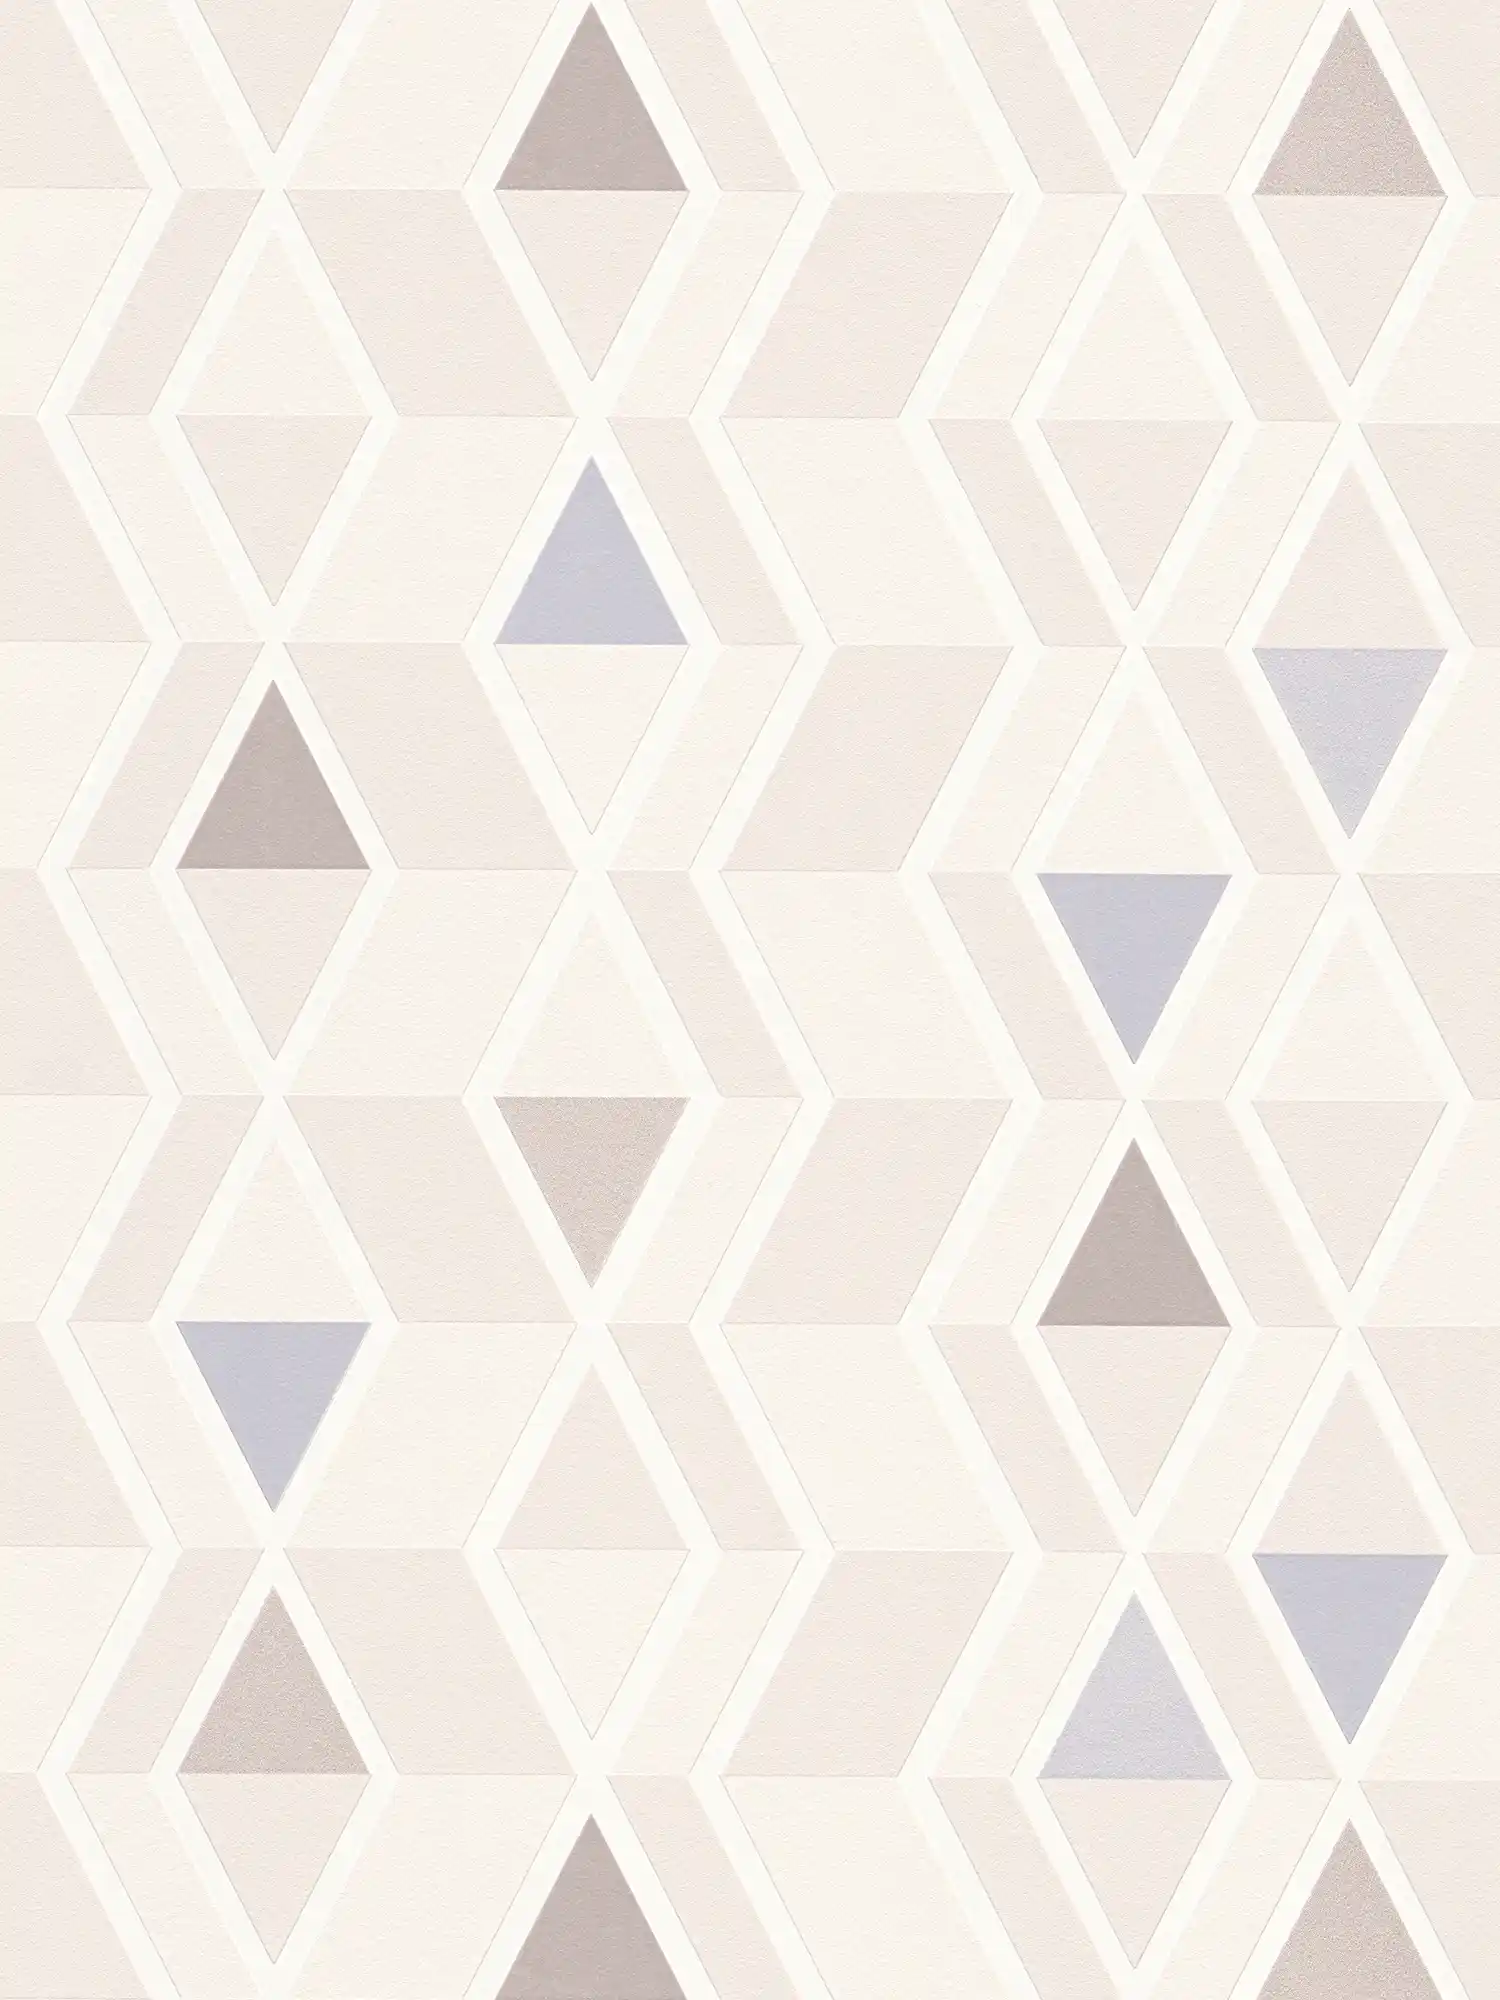         Retro design wallpaper with diamond pattern & 3D structure - beige
    